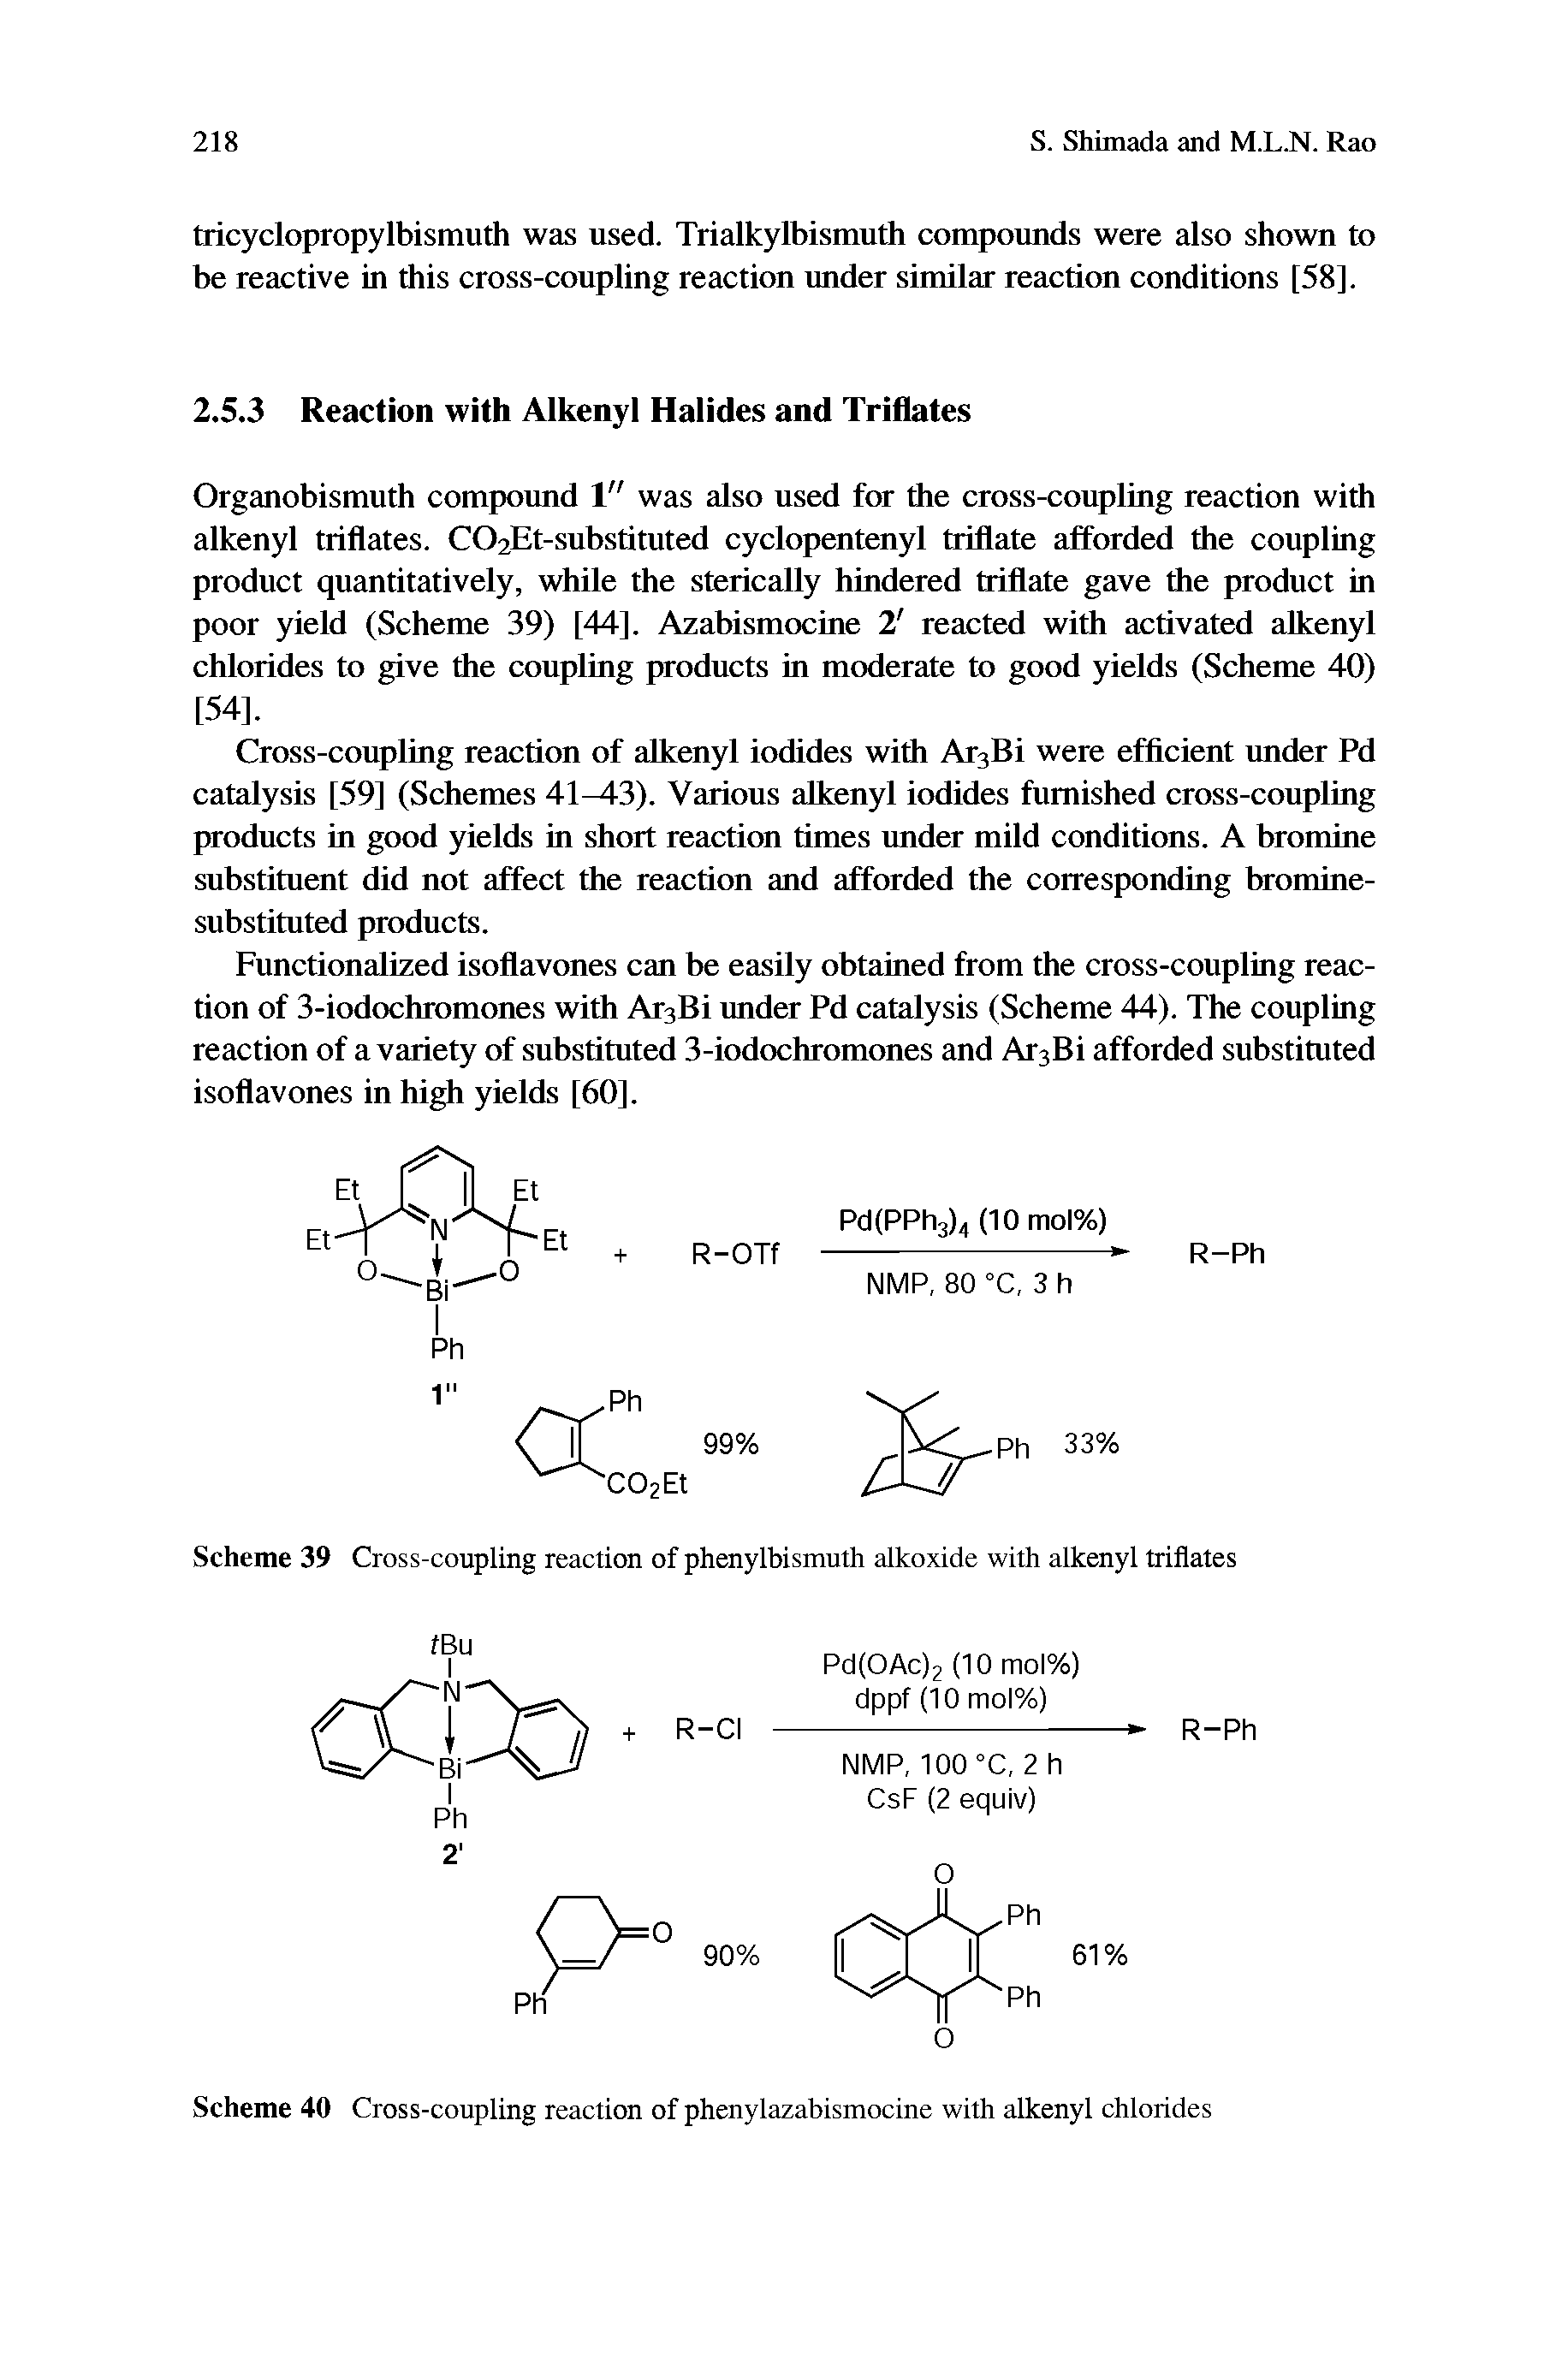 Scheme 40 Cross-coupling reaction of phenylazabismocine with alkenyl chlorides...